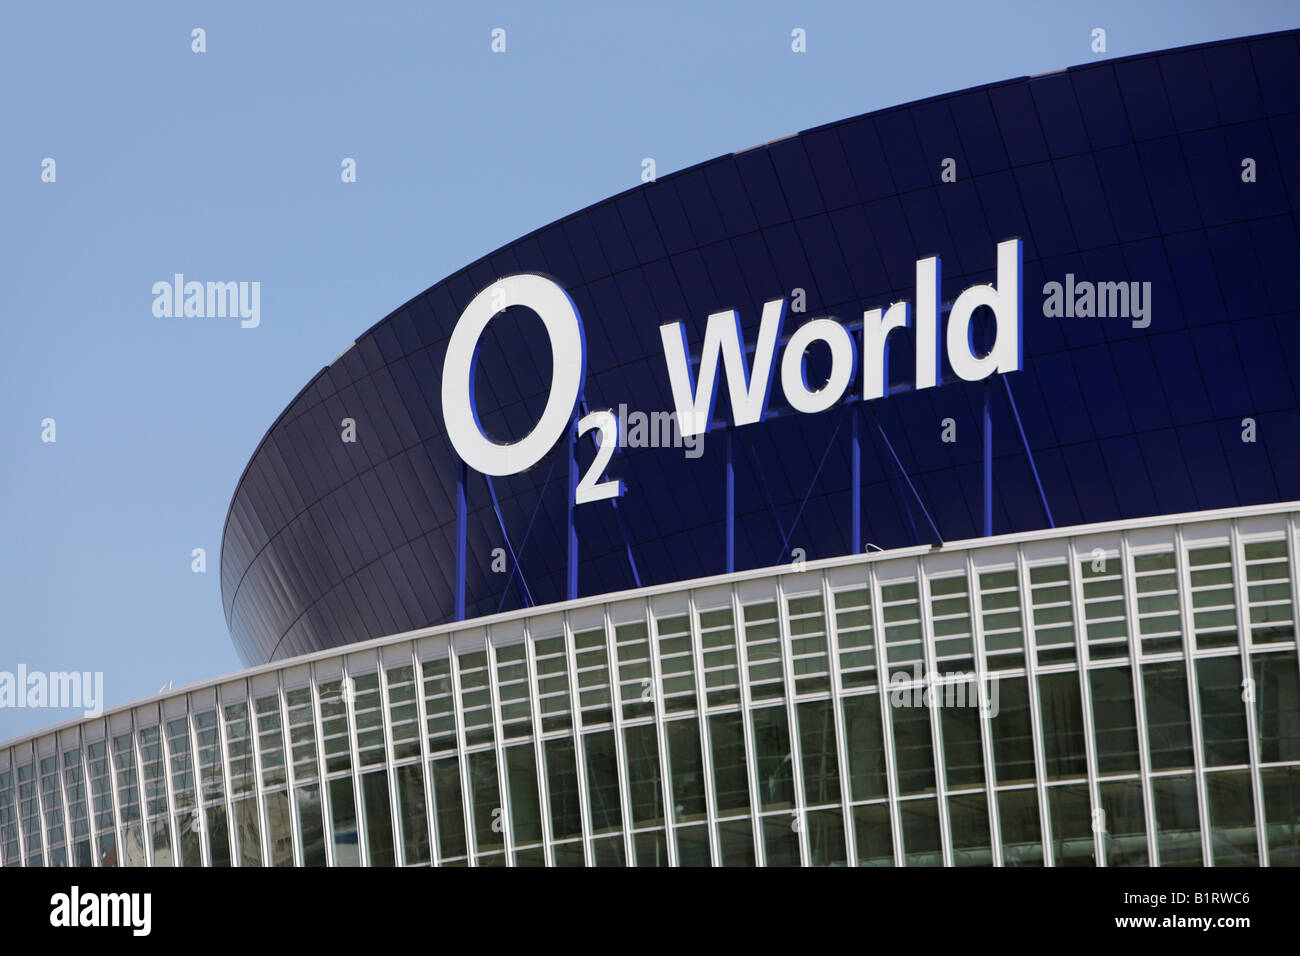 O2 World, Anschutz Entertainment Group Development GmbH, venue at Berlin-Friedrichshain, Germany, Europe Stock Photo